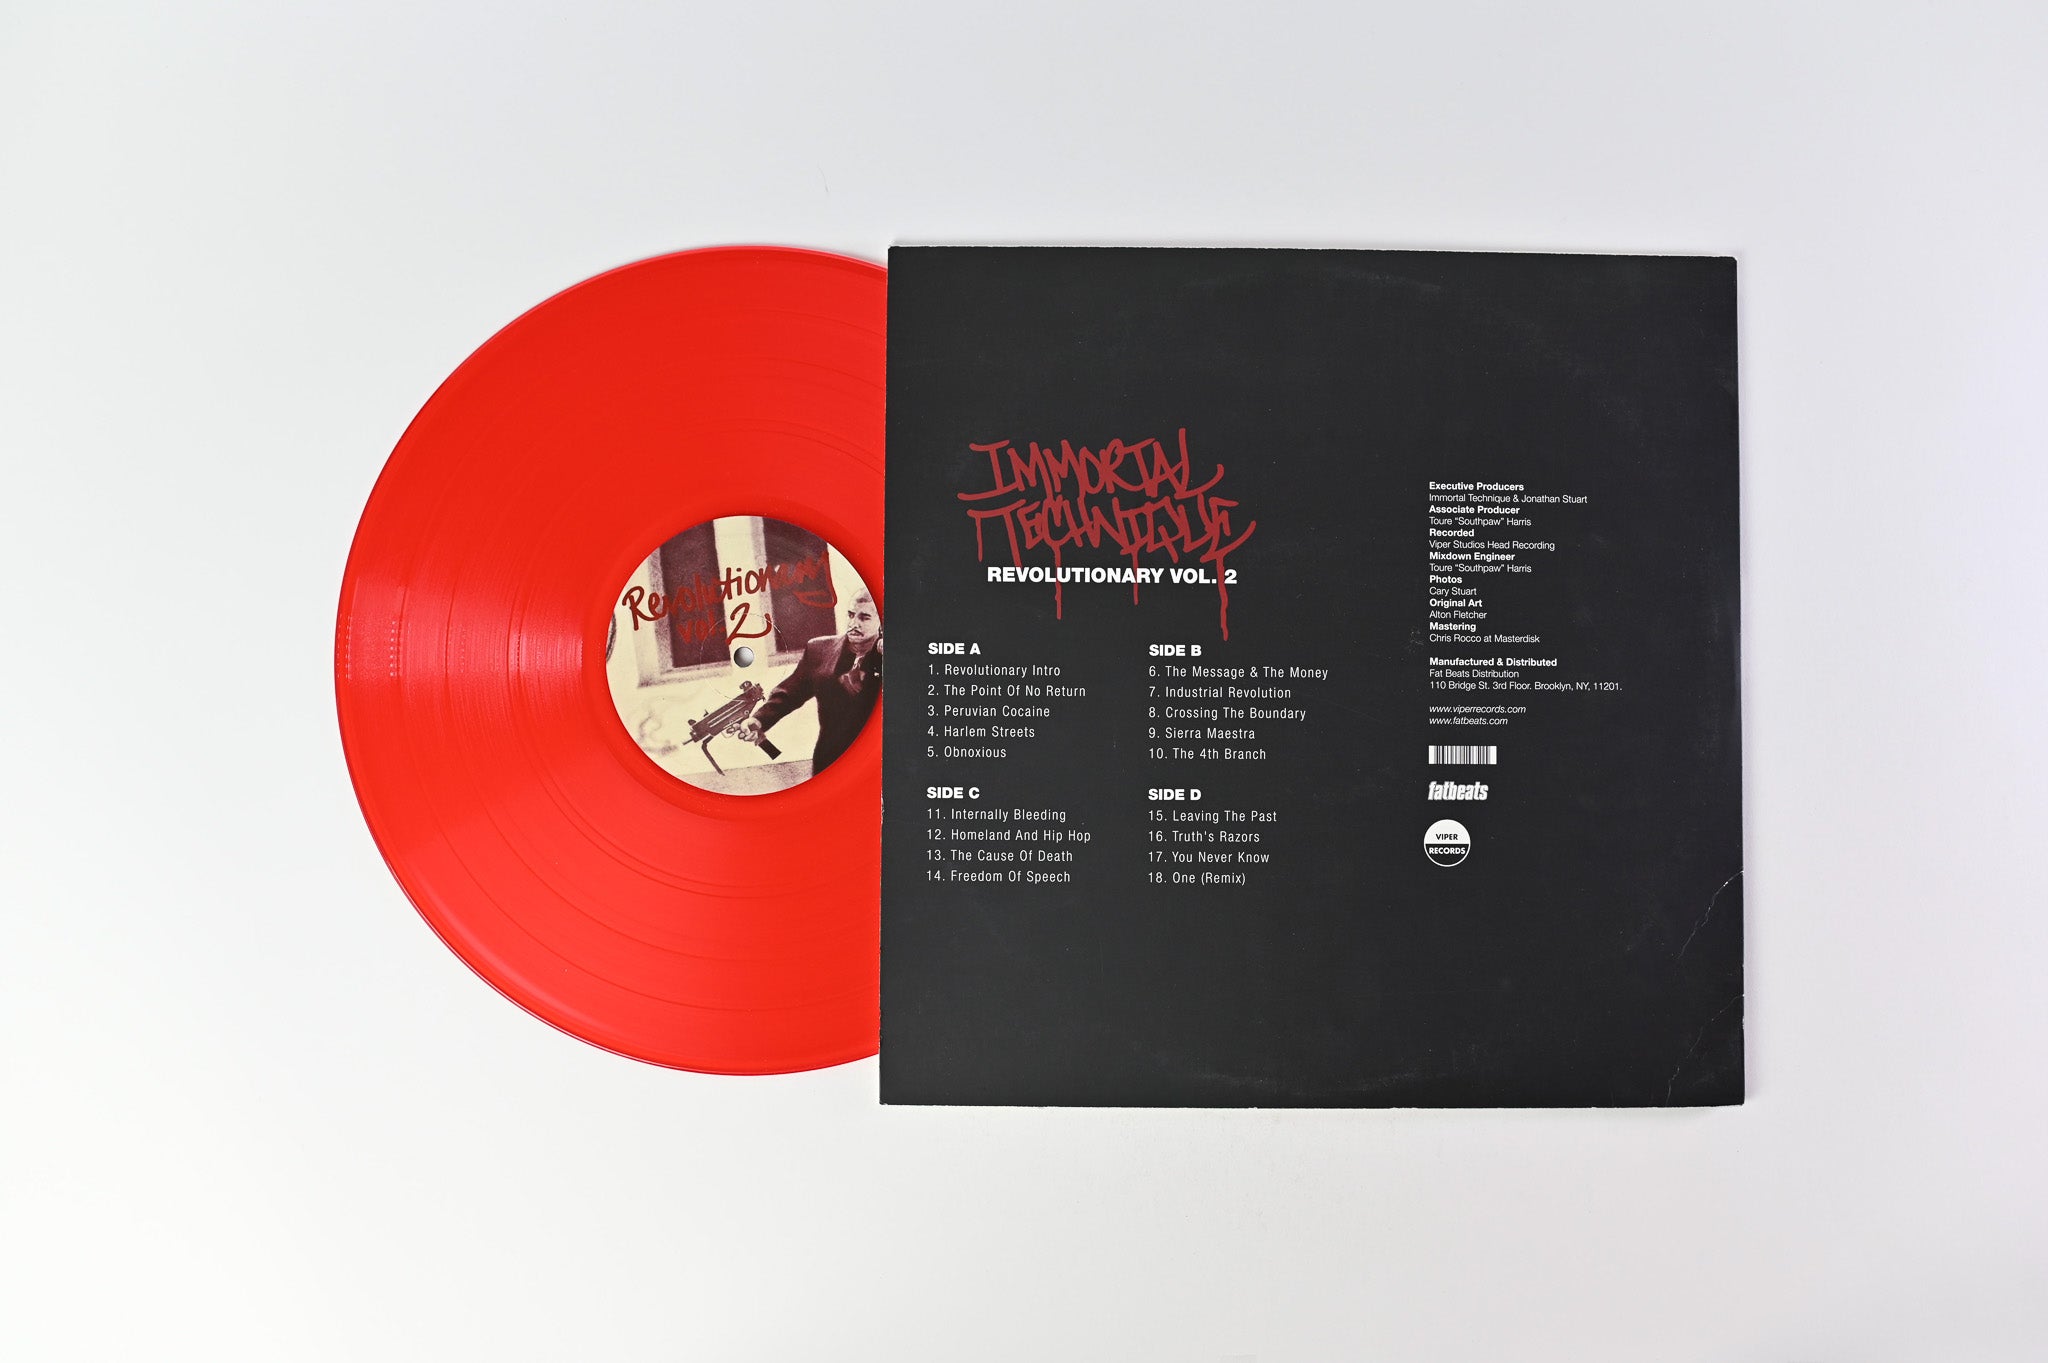 Immortal Technique - Revolutionary Vol. 2 on Viper Ltd Red Translucent Reissue